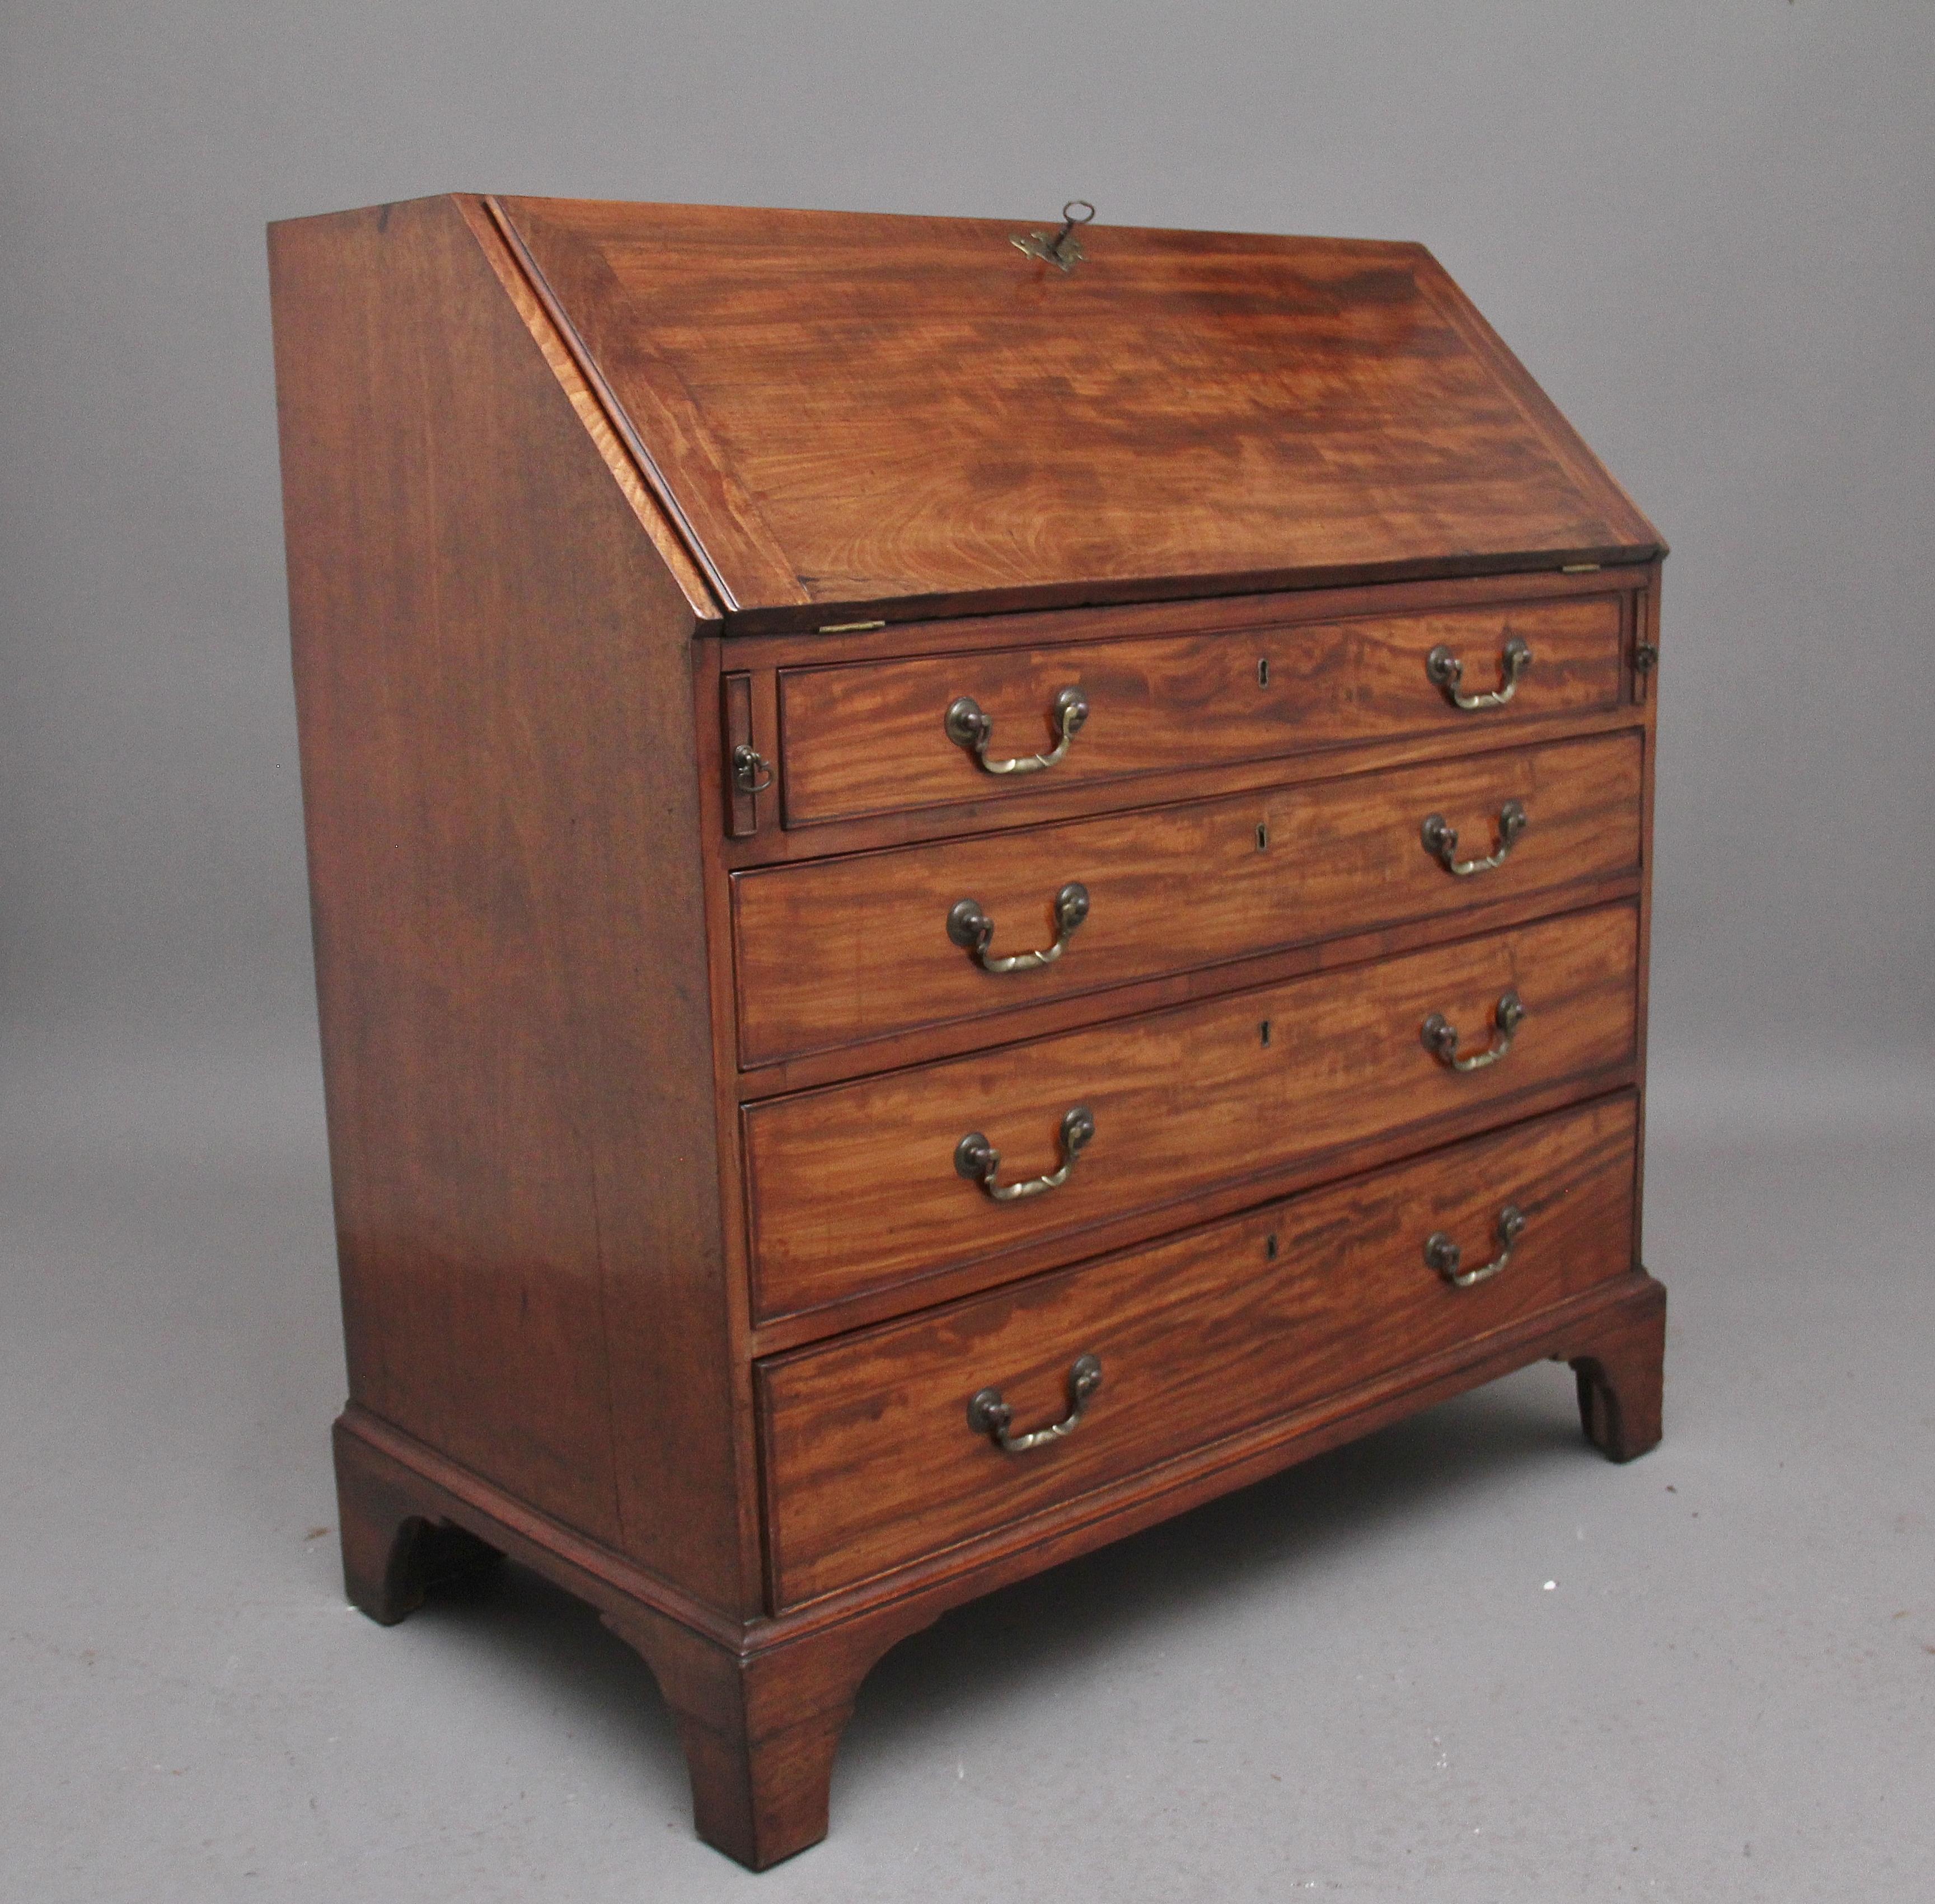 18th century mahogany furniture